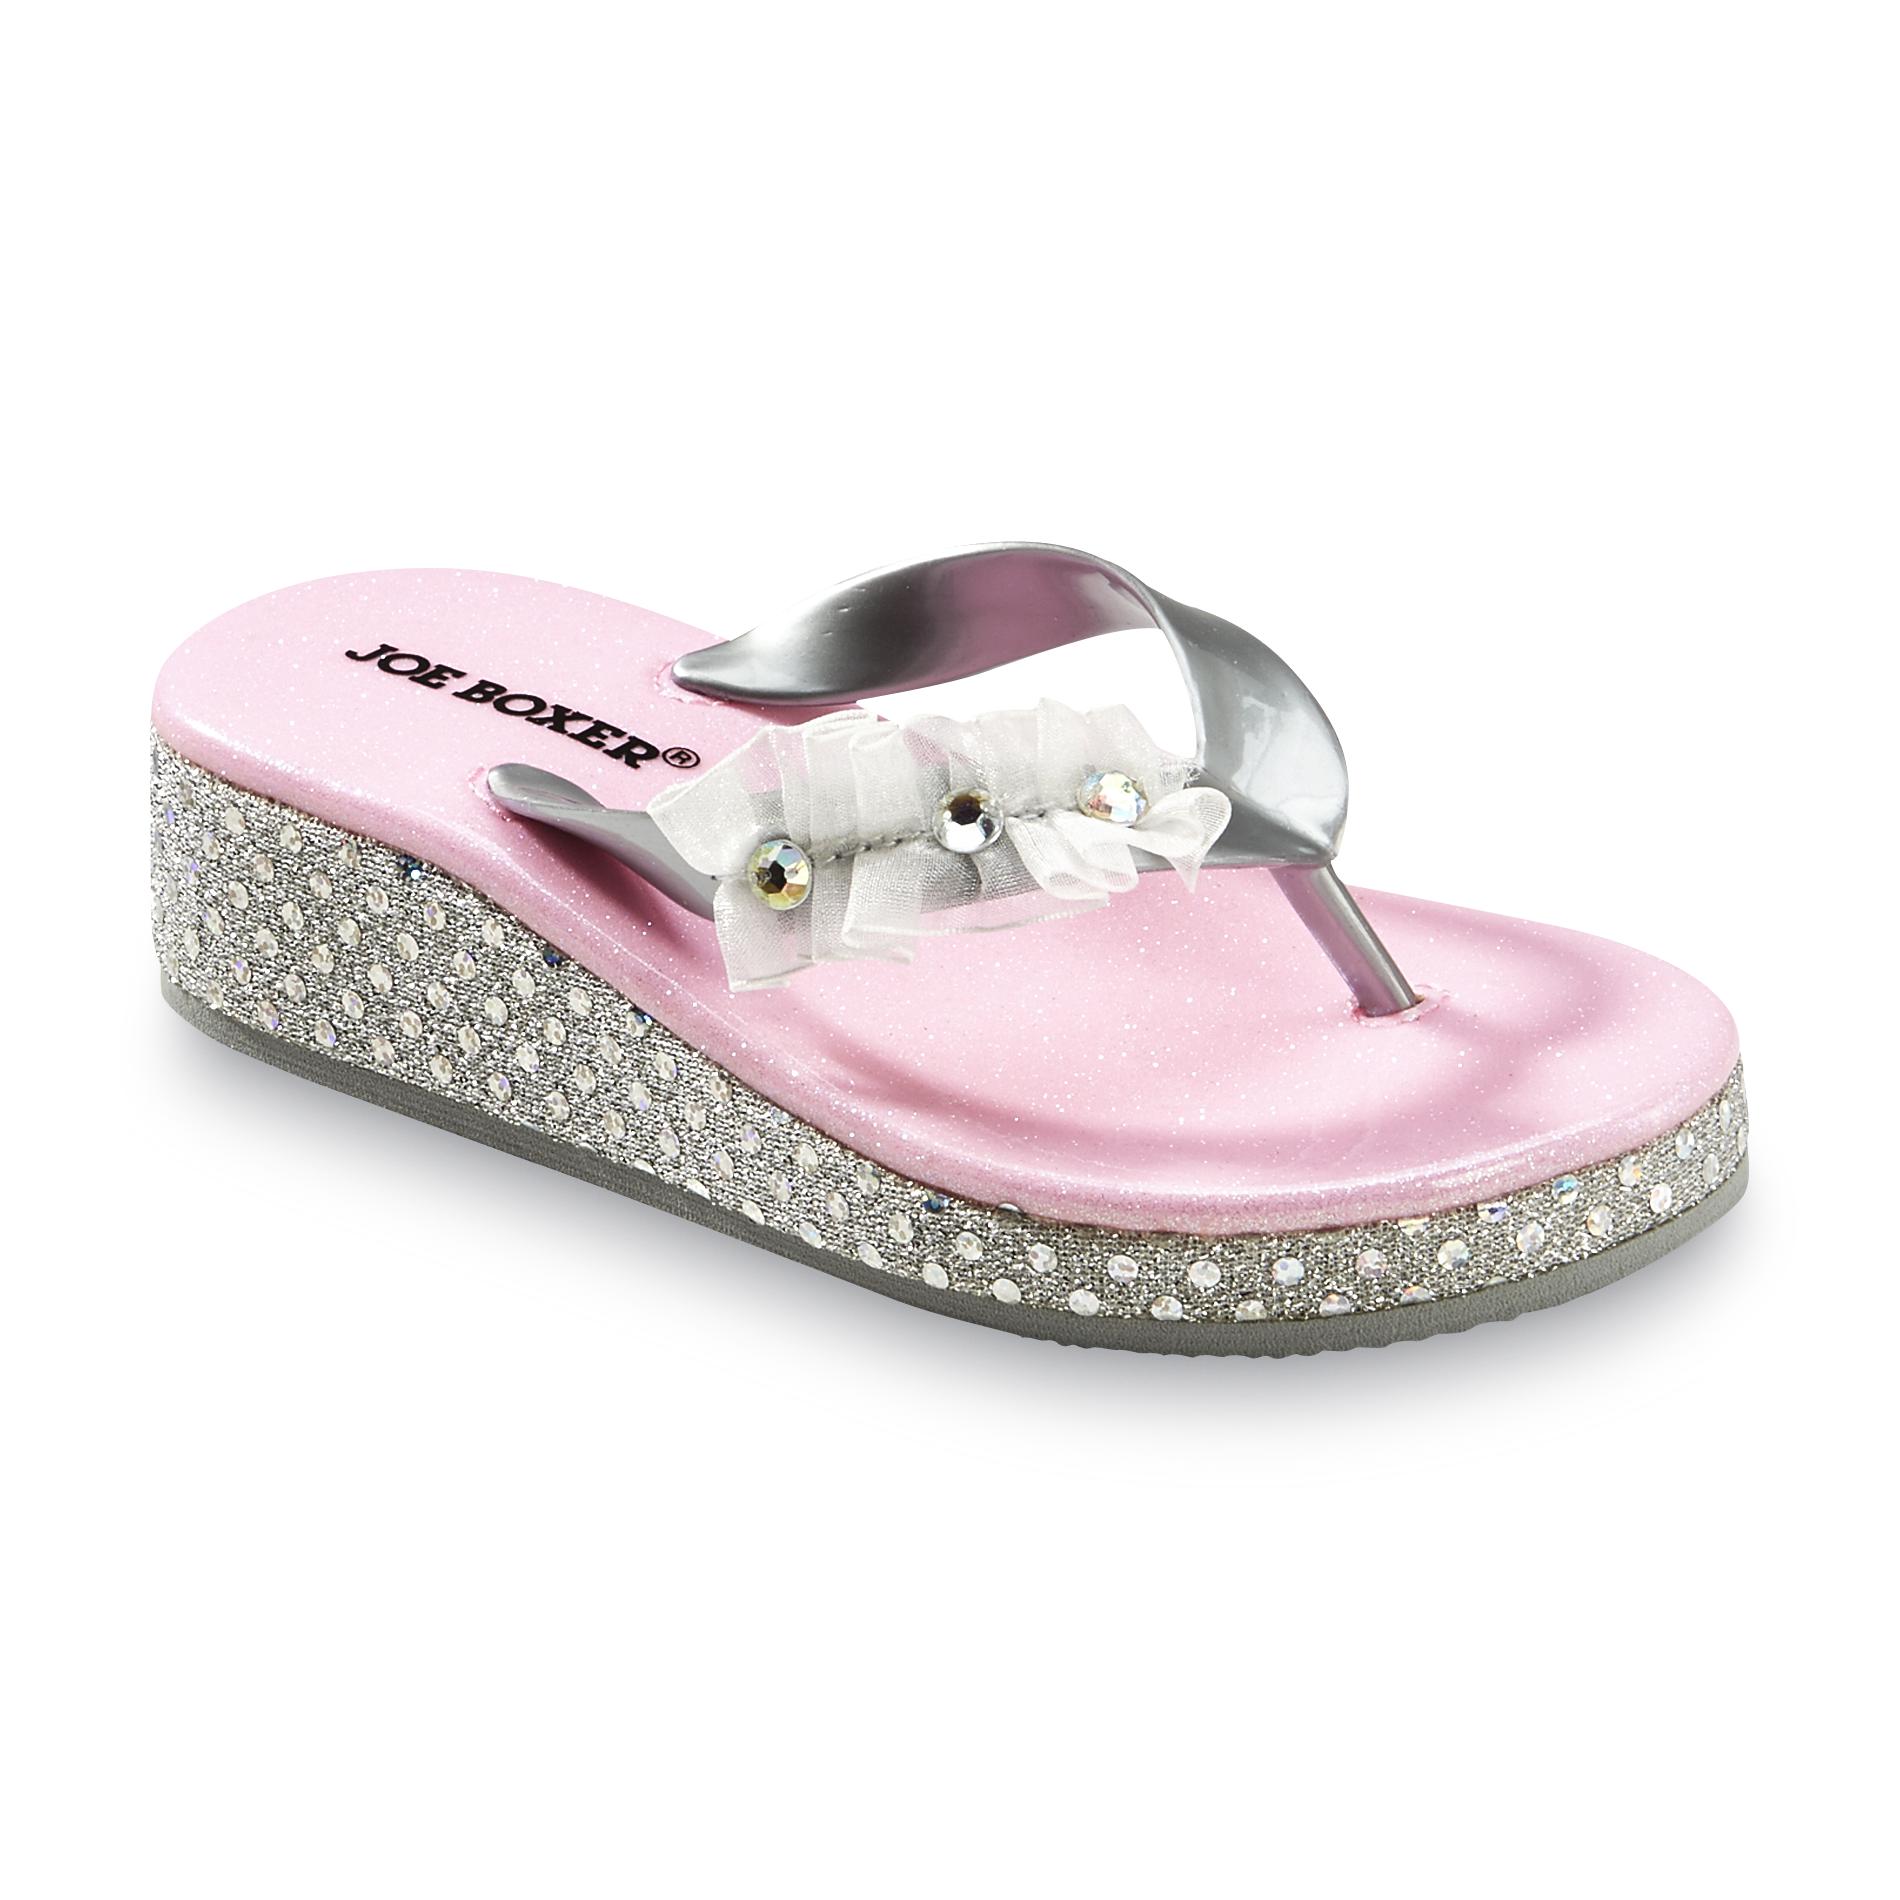 Joe Boxer Girl's Pink/Silver Platform Thong Sandals